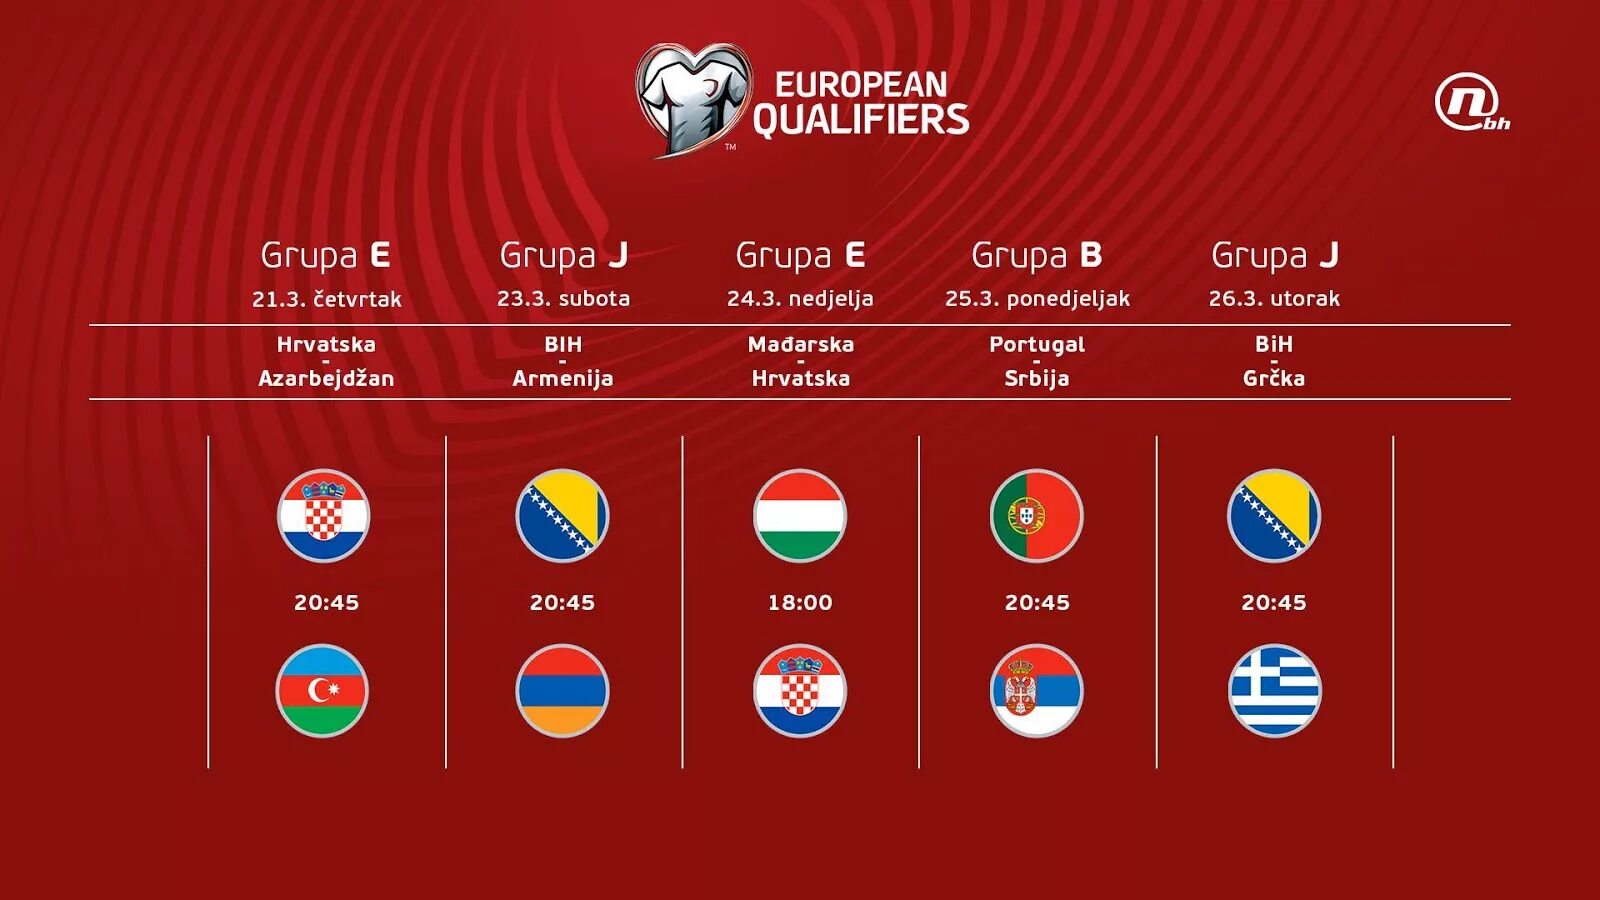 Eu qualifiers. Euro Qualifiers. UEFA European Qualifiers. EC Qualifiers что это. European Qualifiers логотип.